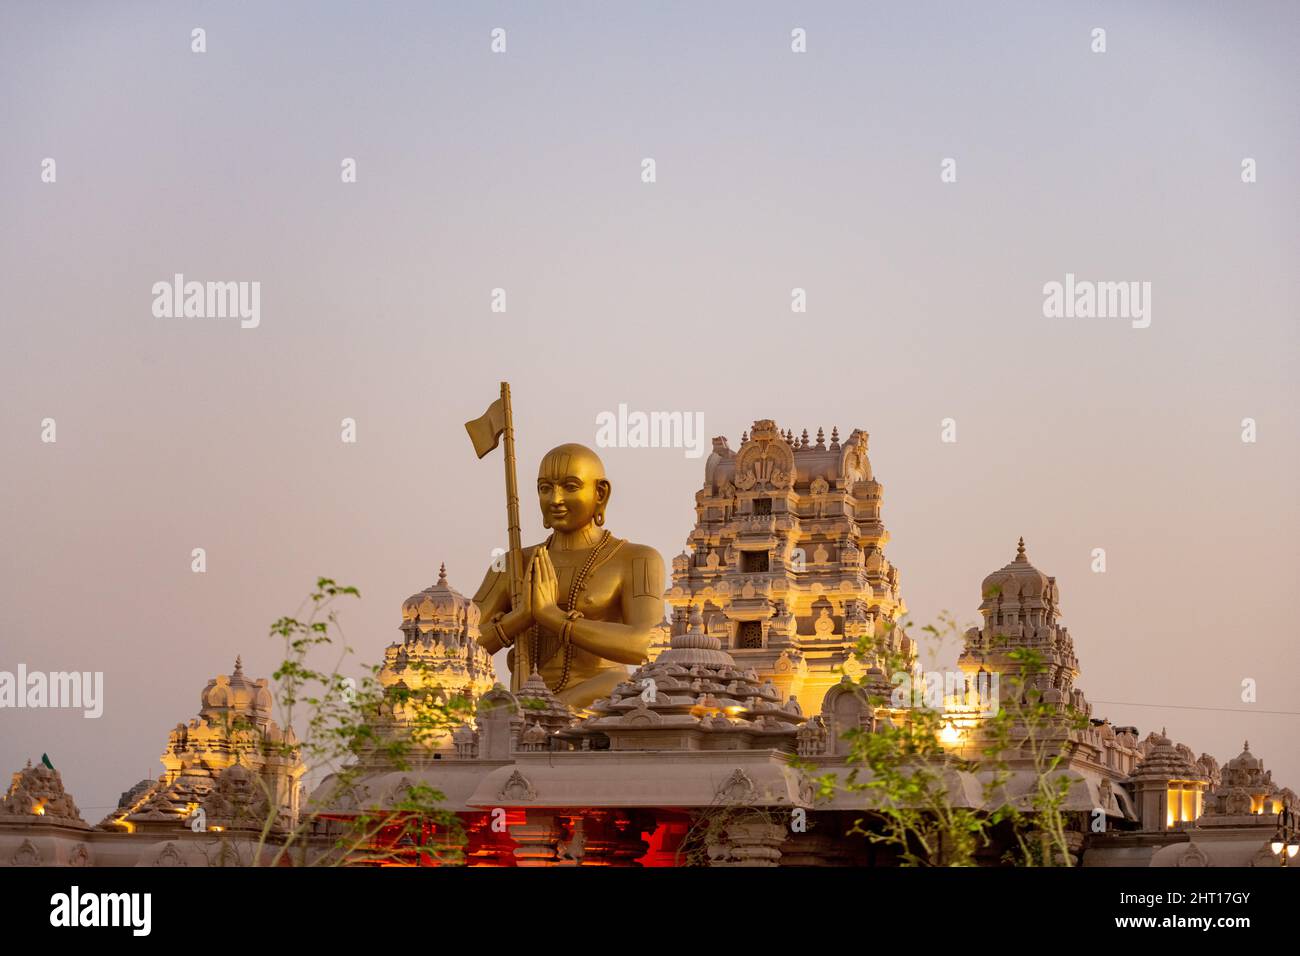 Ramanuja statue, Statue of Equality, Muchintal, Hyderabad, Telengana, India. Stock Photo